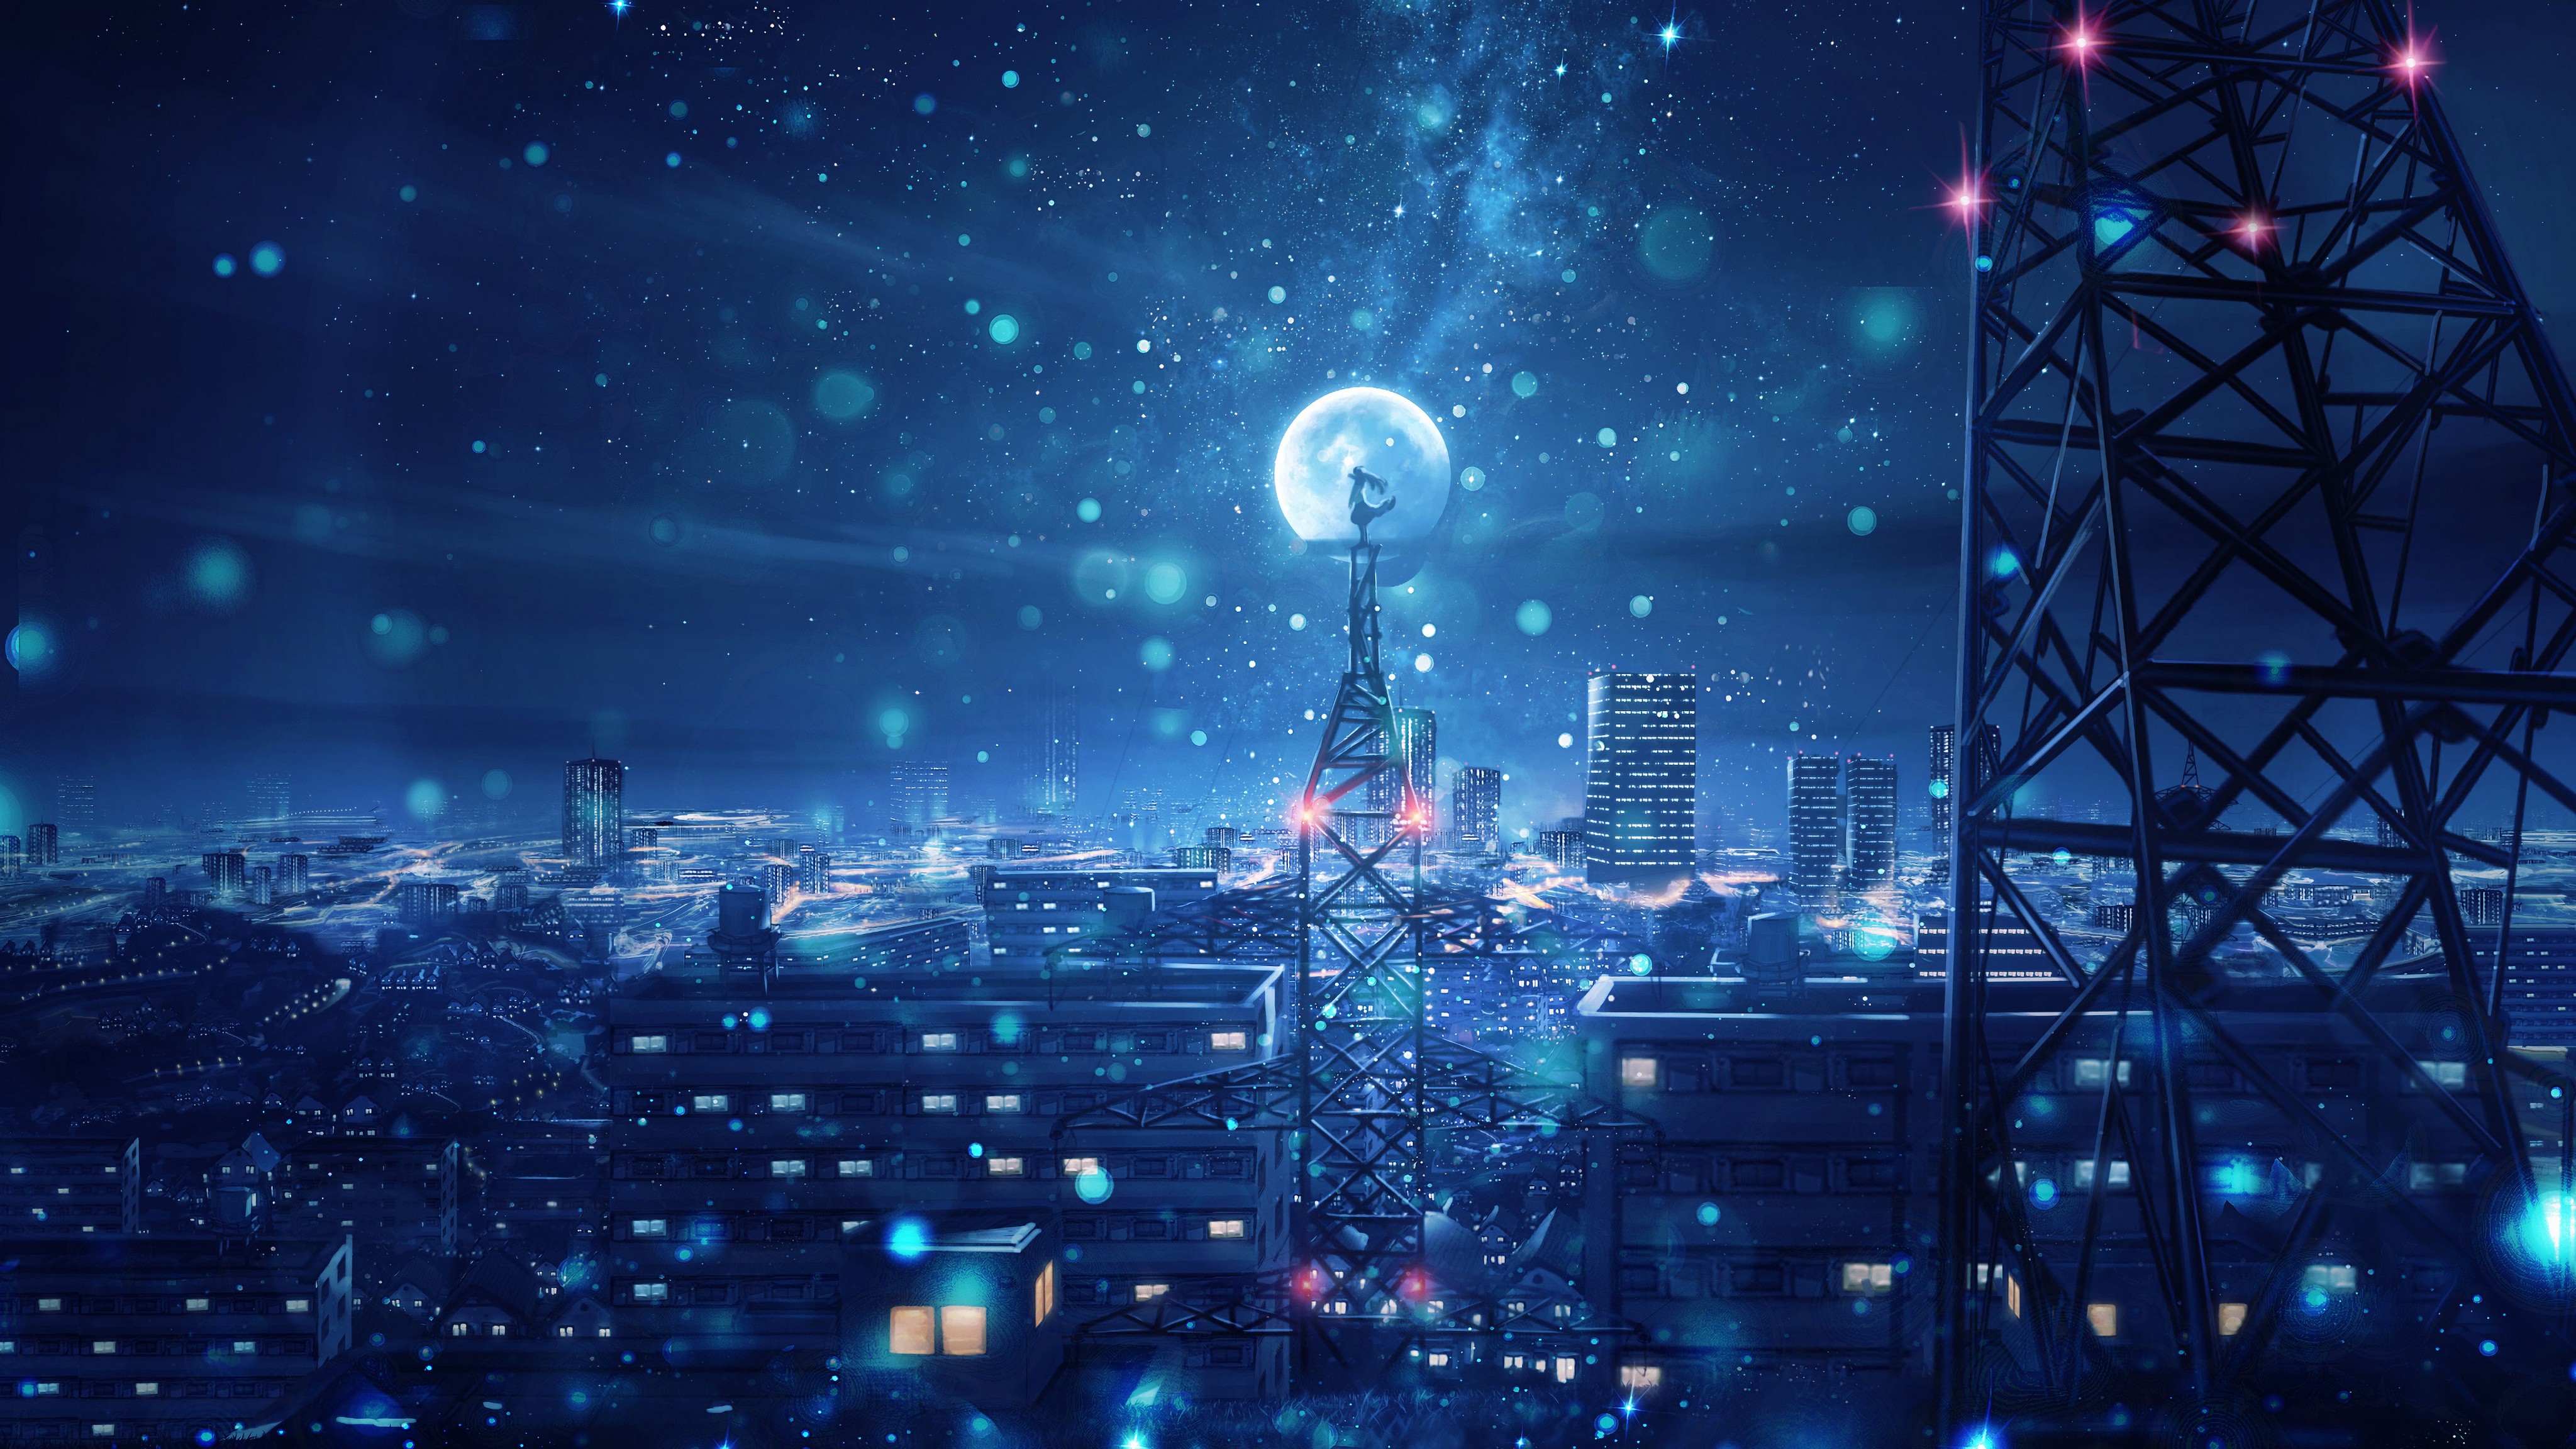 Blue Night Big Moon Anime Scenery 4k, HD Anime, 4k Wallpapers, Images ...